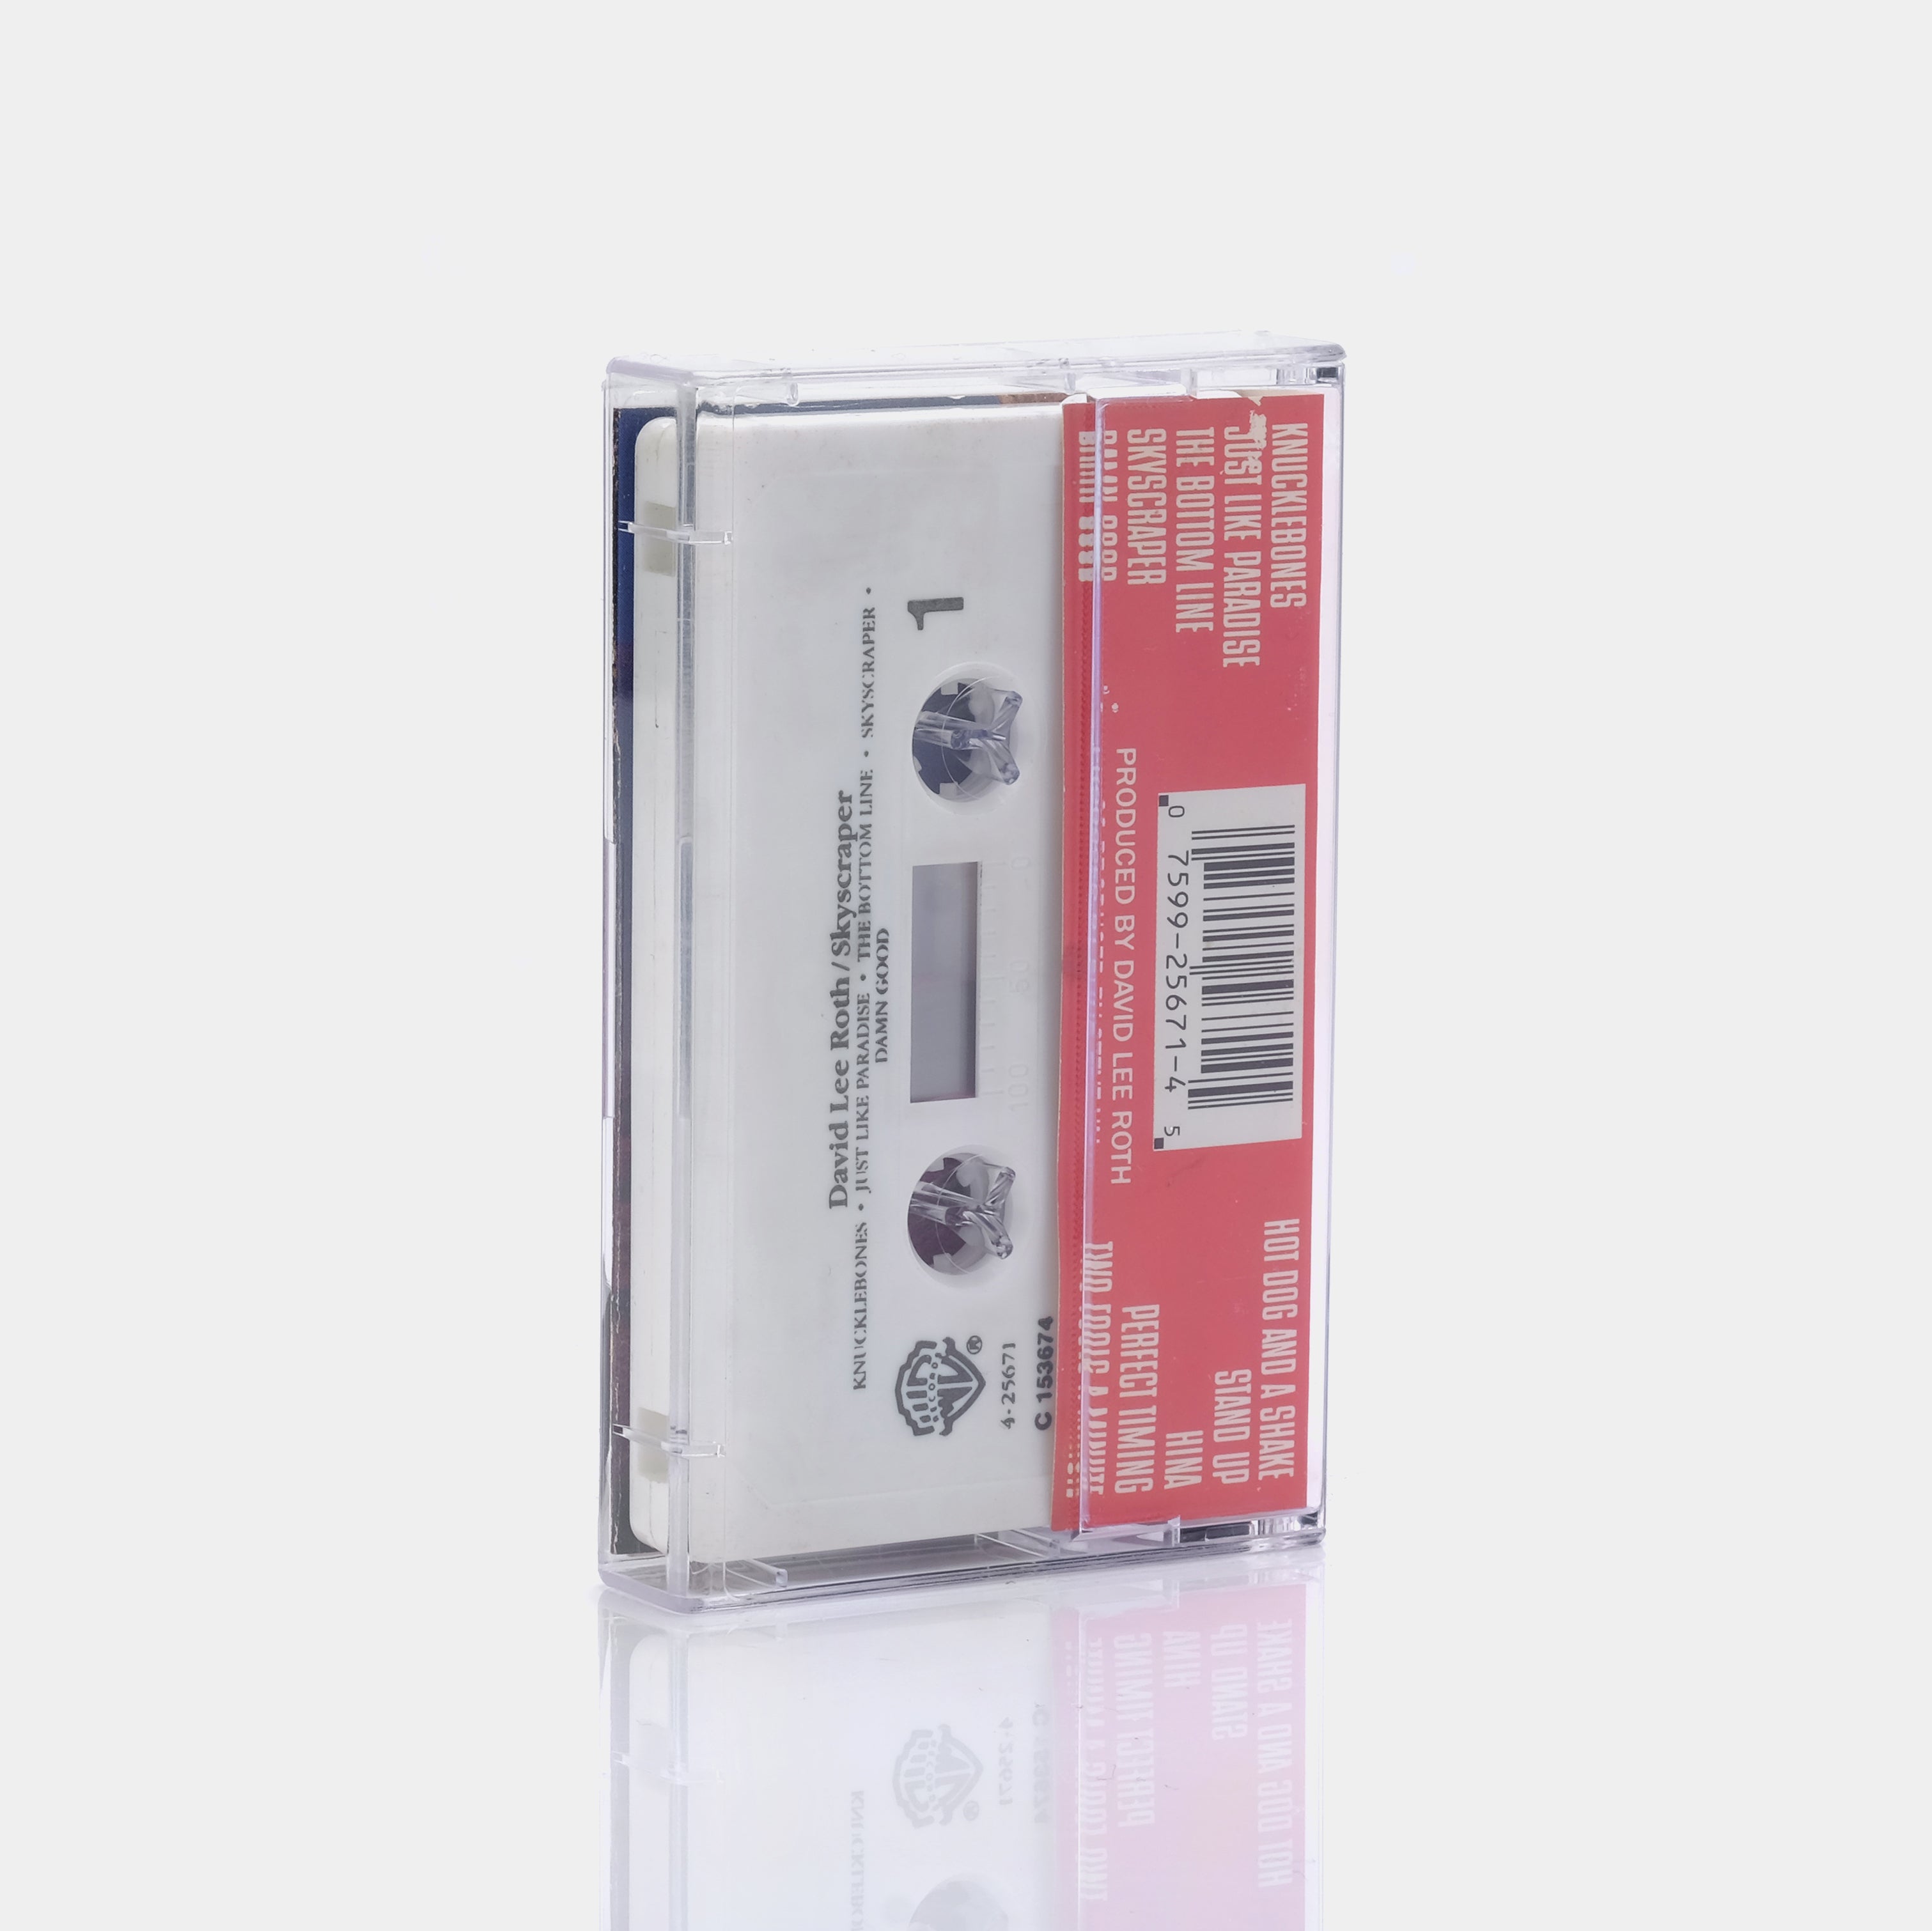 David Lee Roth - Skyscraper Cassette Tape